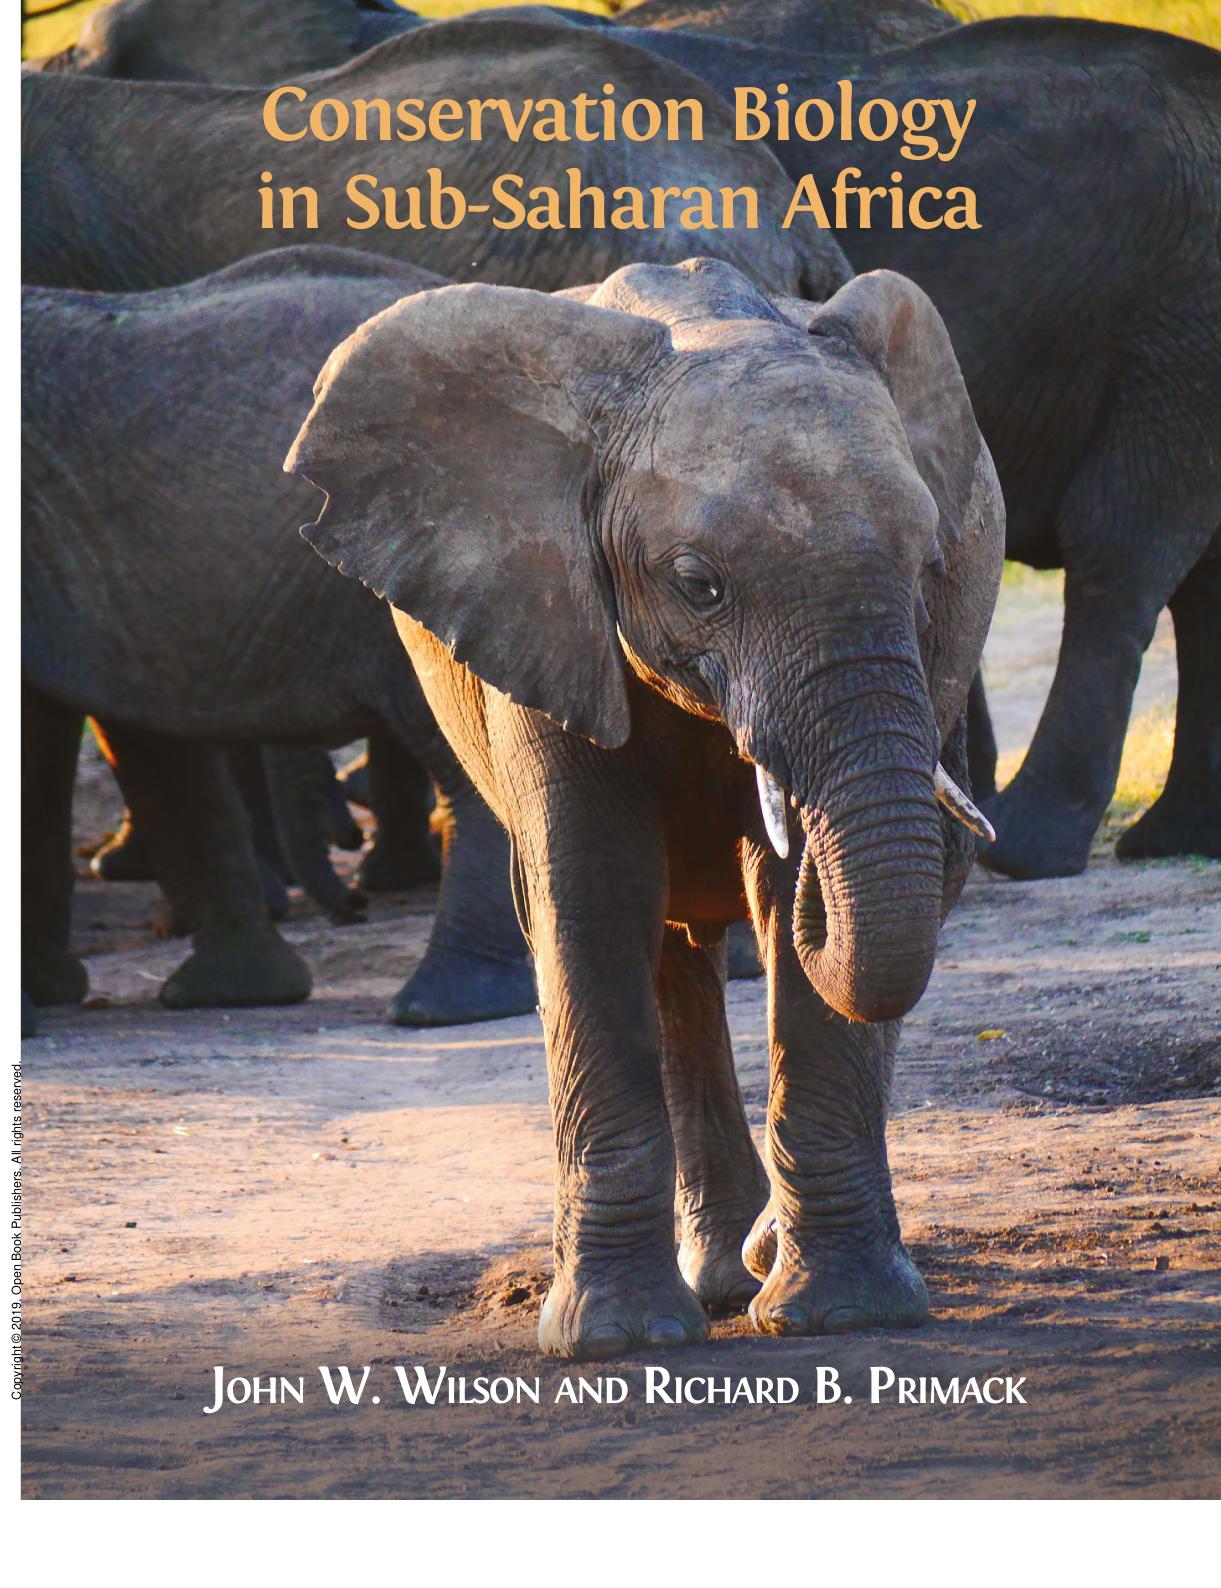 Conservation Biology in Sub-Saharan Africa by John W. Wilson; Richard B. Primack